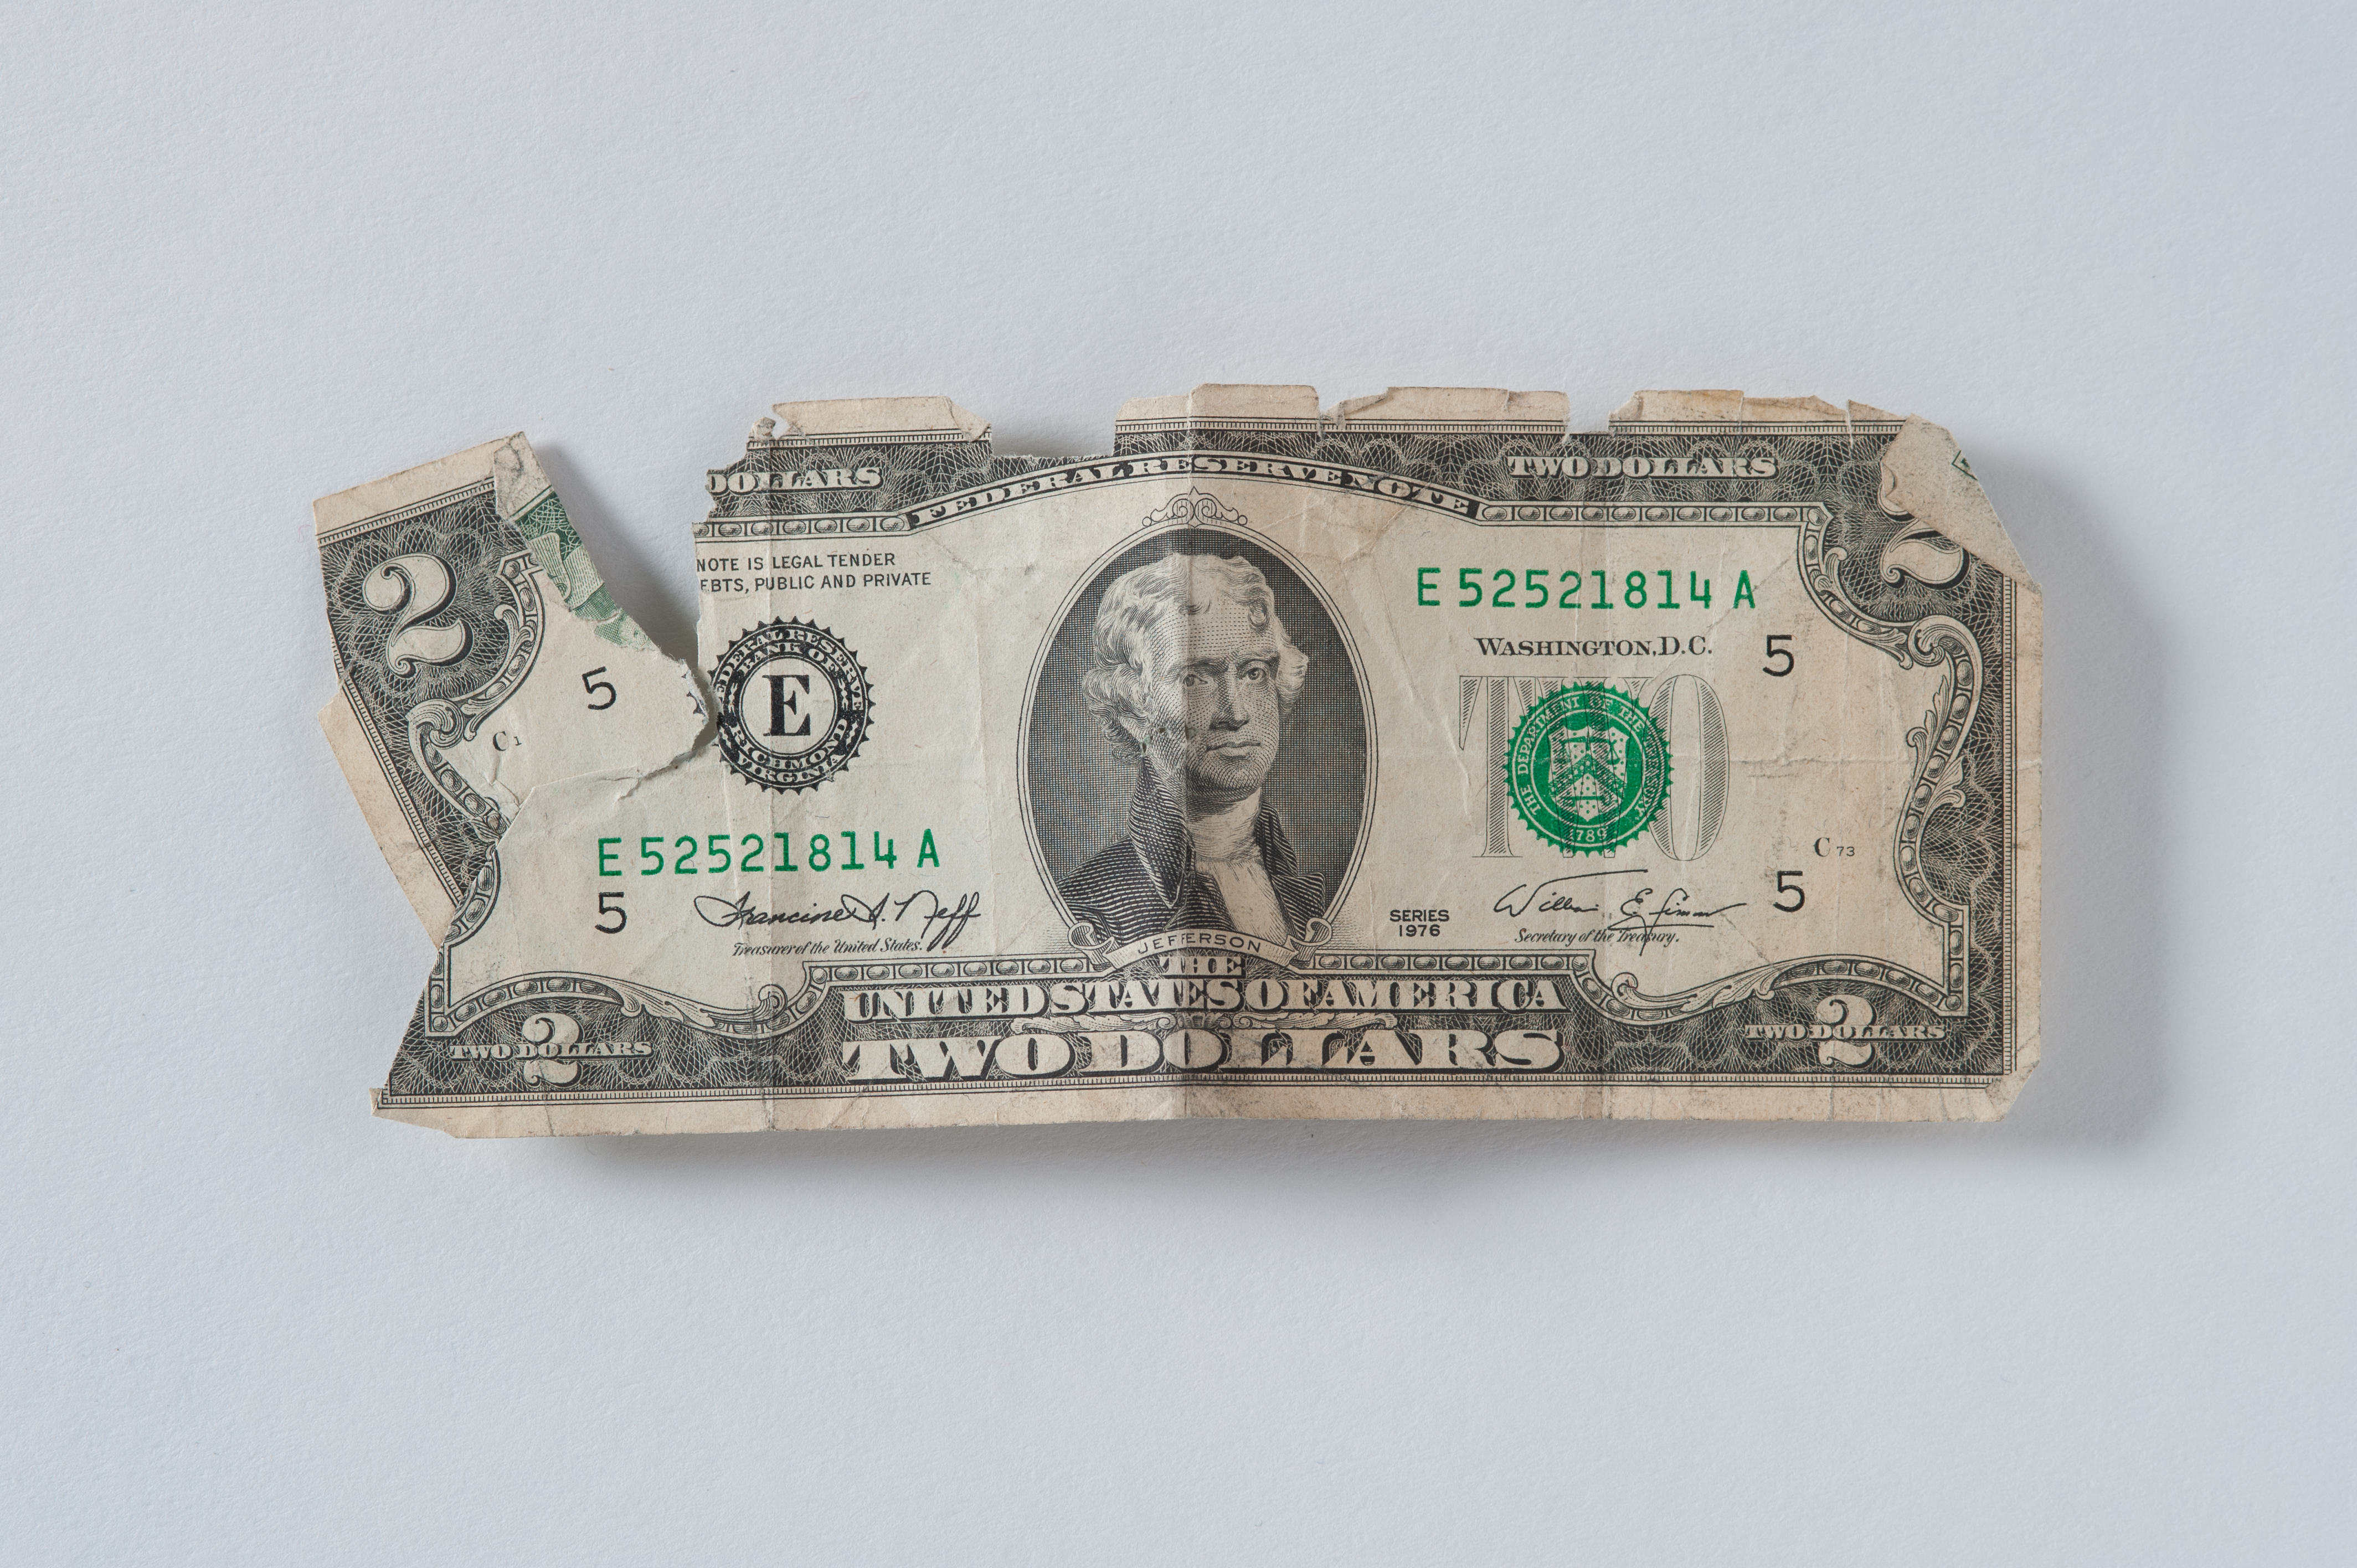 A worn $2 bill belonging to Robert Gschaar is displayed on a white surface. The bill was found inside Gschaar’s wallet at Ground Zero.